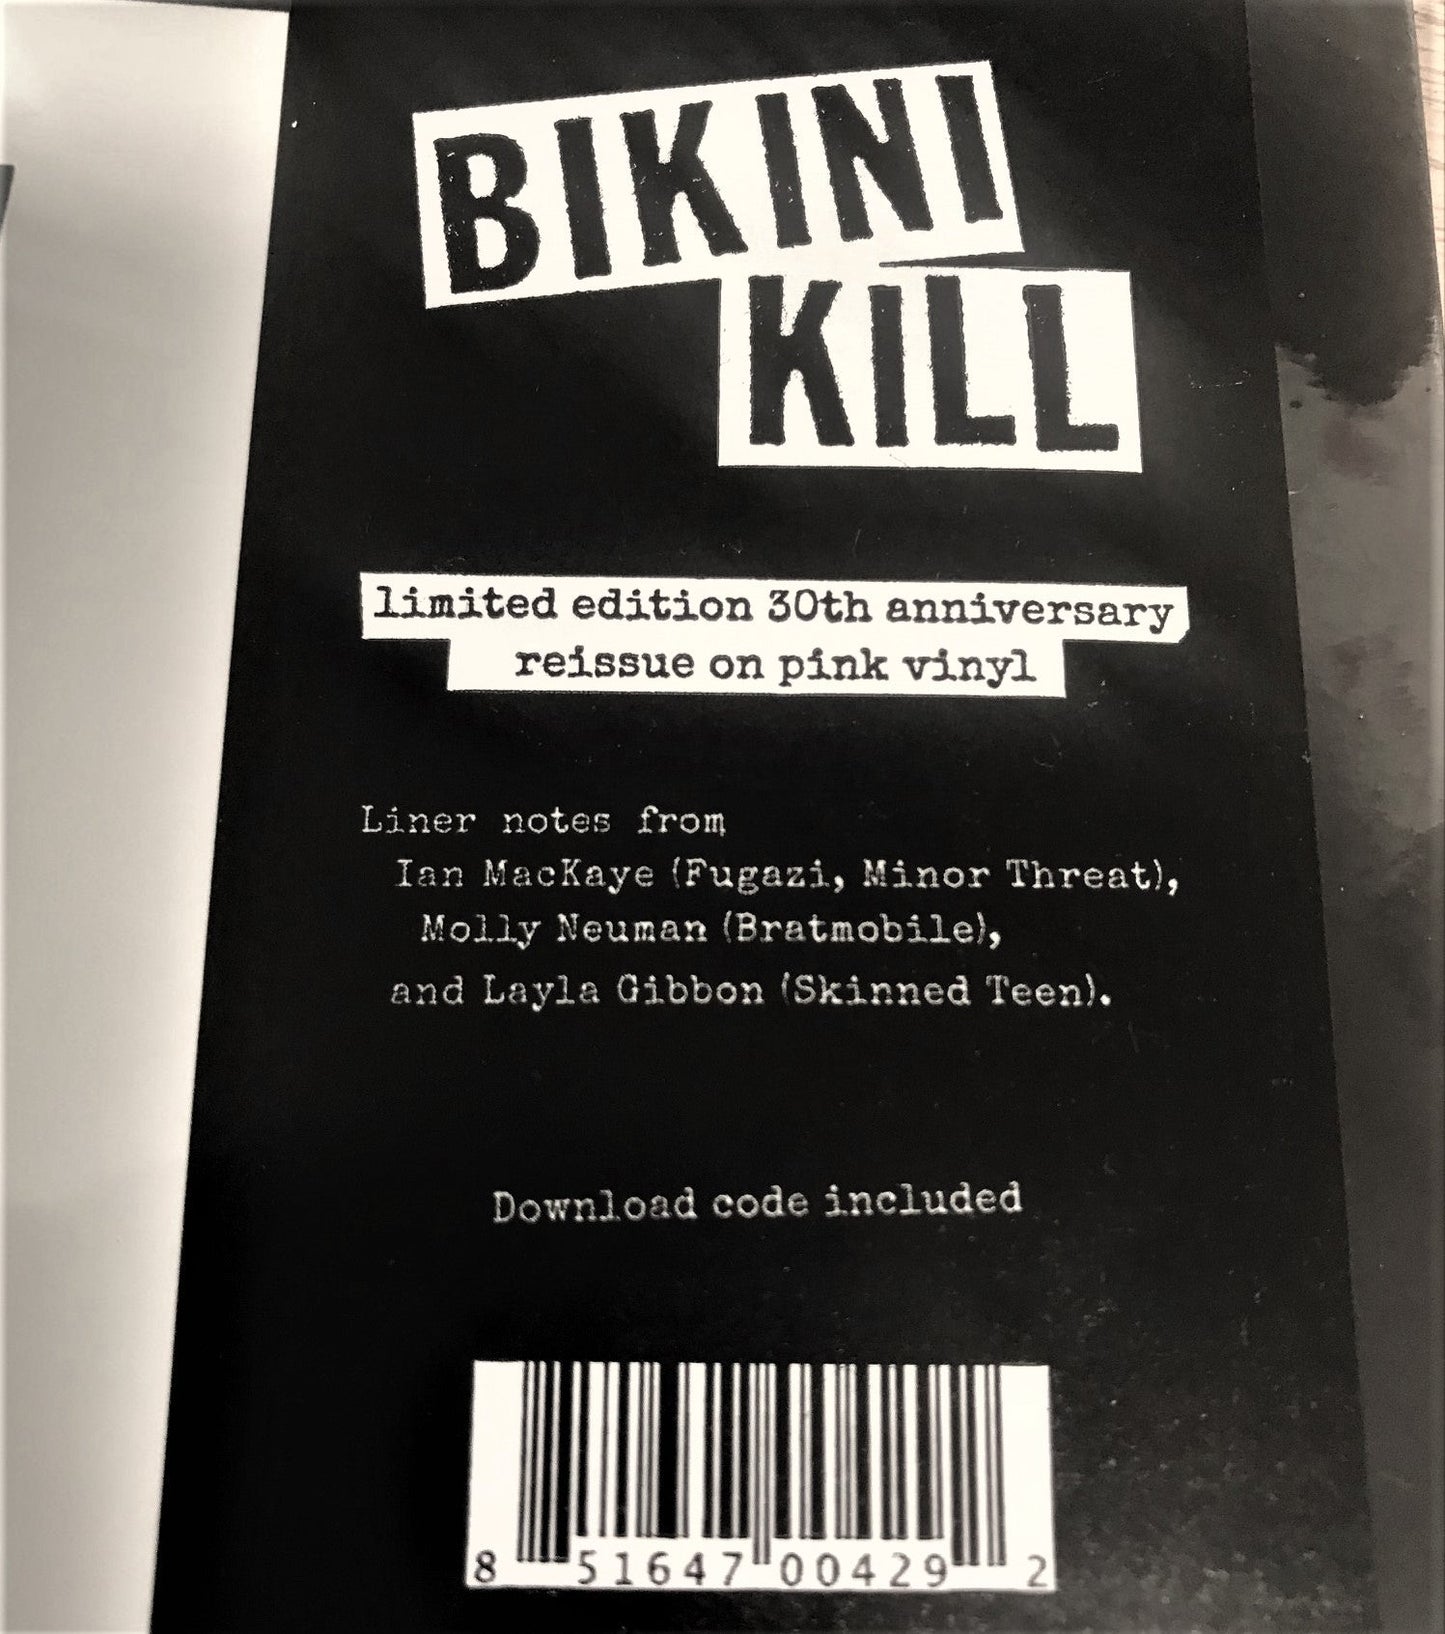 Arcade Sound - Bikini Kill - S/T  (Limited Edition 30th Anniversary Edition on PINK Vinyl) image